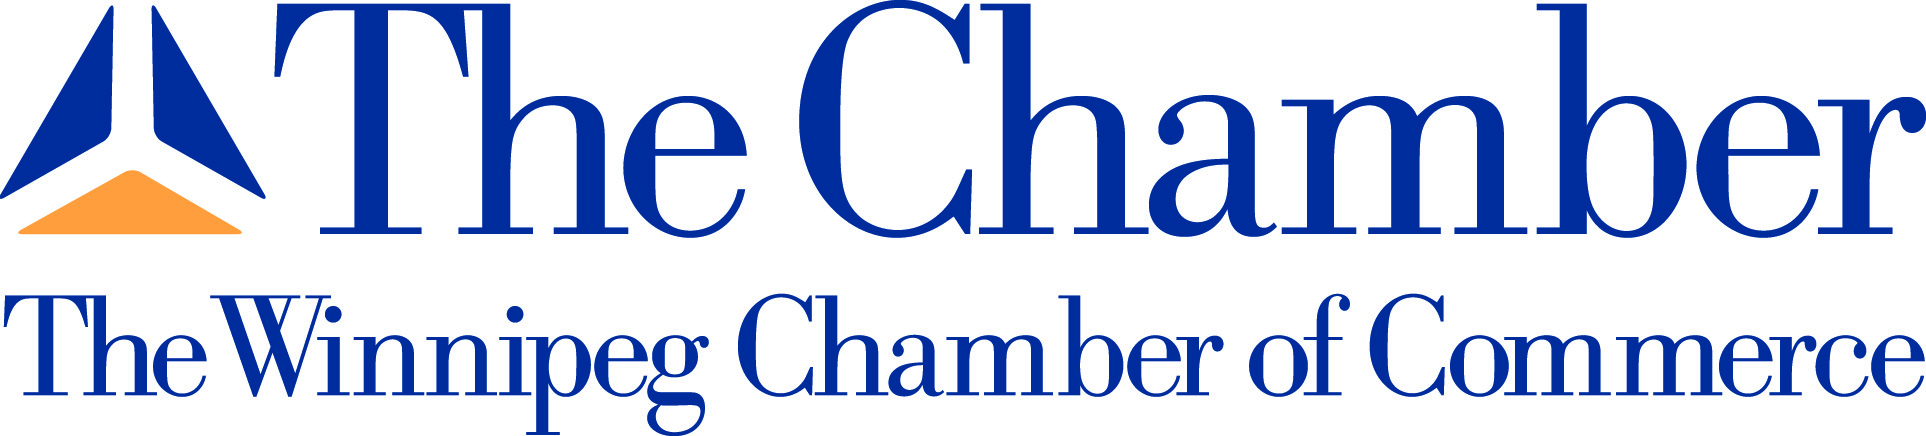 Winnipeg Chamber of Commerce